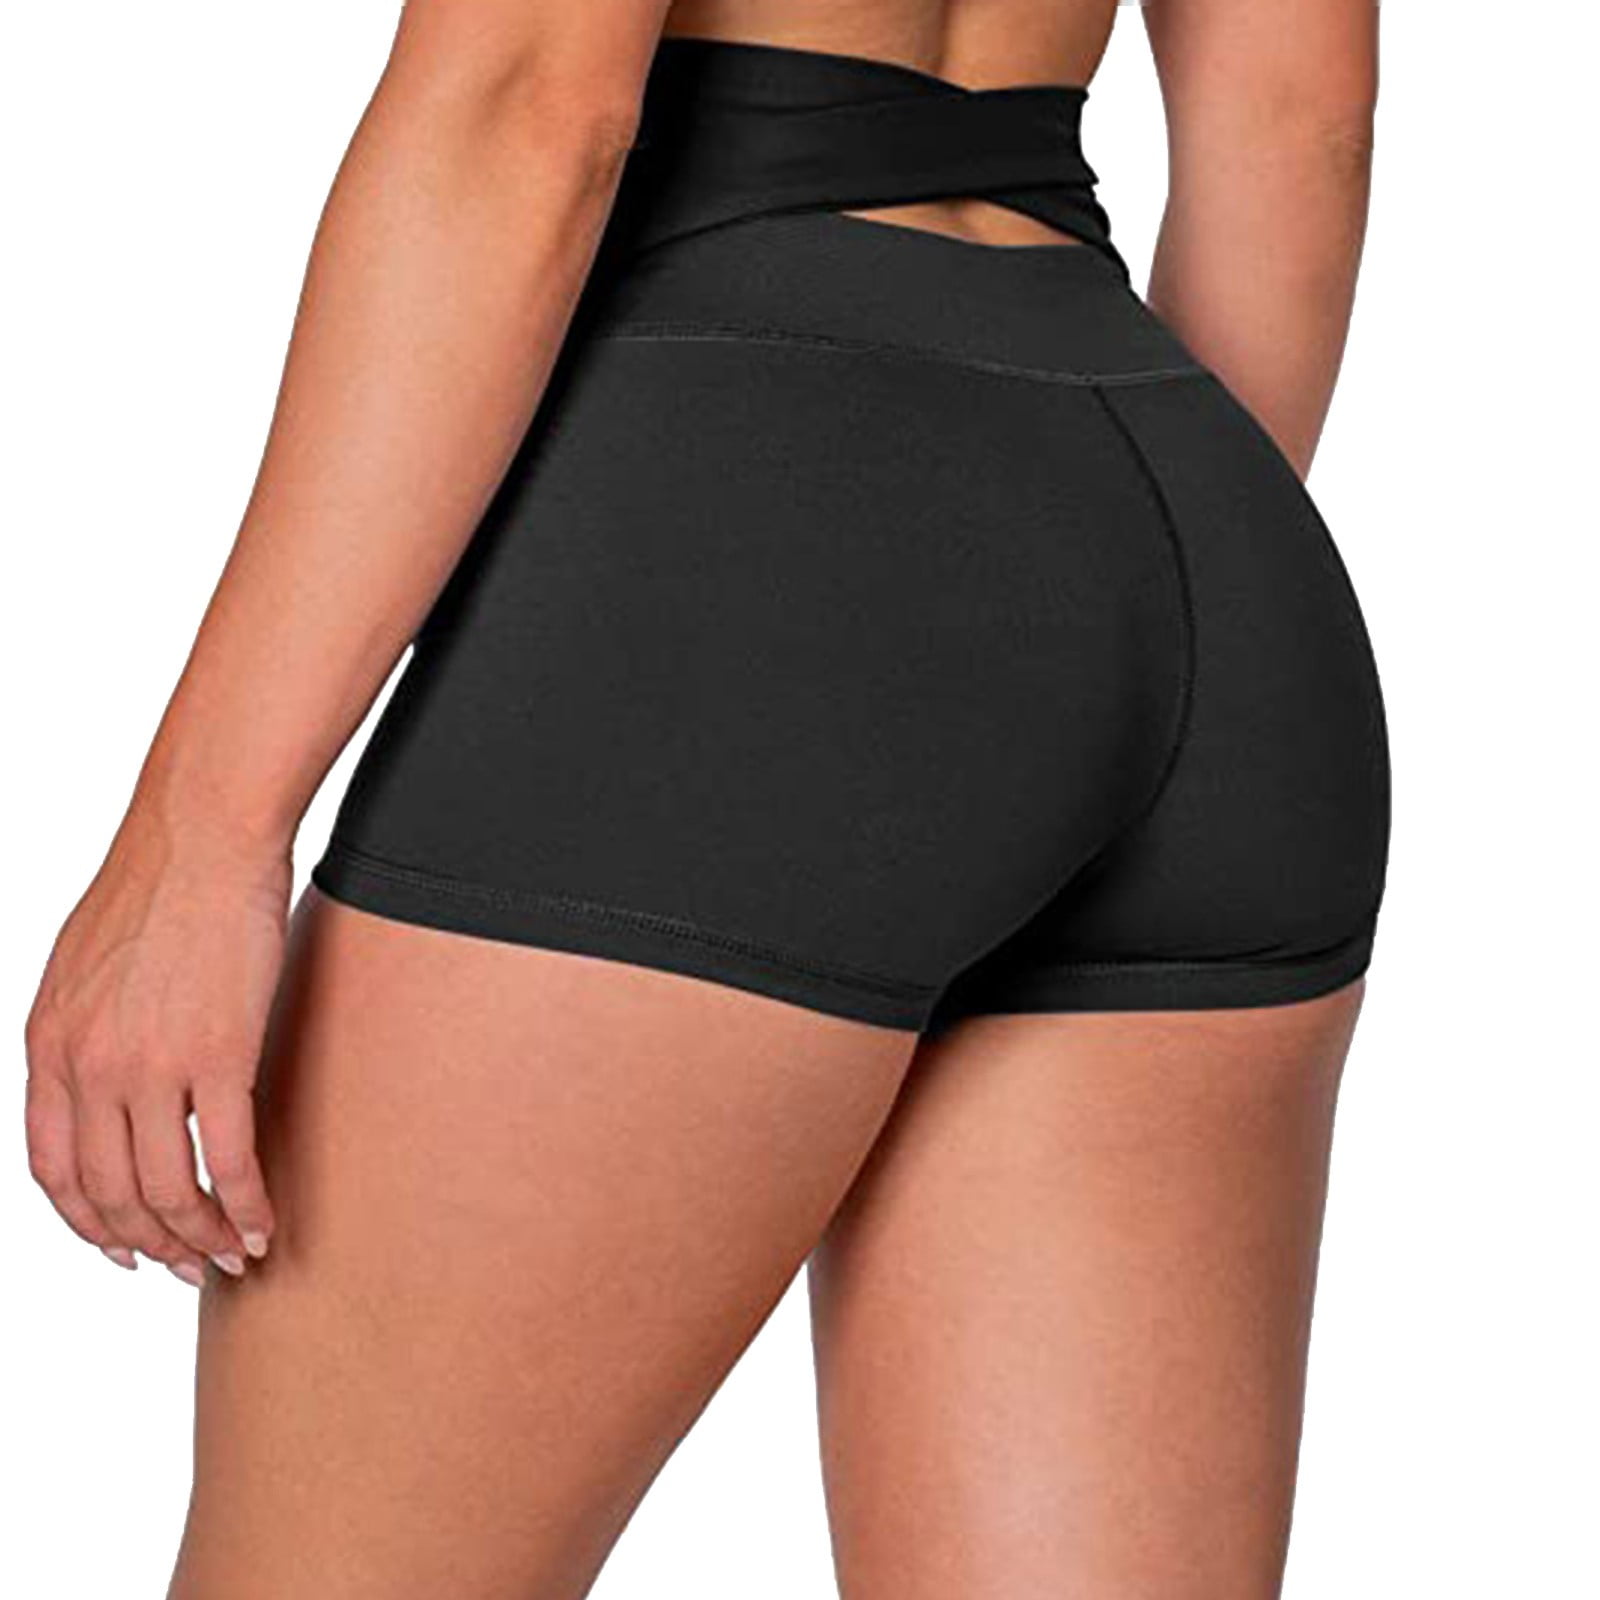 adviicd Petite Yoga Pants For Women Yoga Pants For Women Women's High Waist Yoga  pants Gym Workout Booty Dance Hot Pants Lifting Sports Leggings Black S 